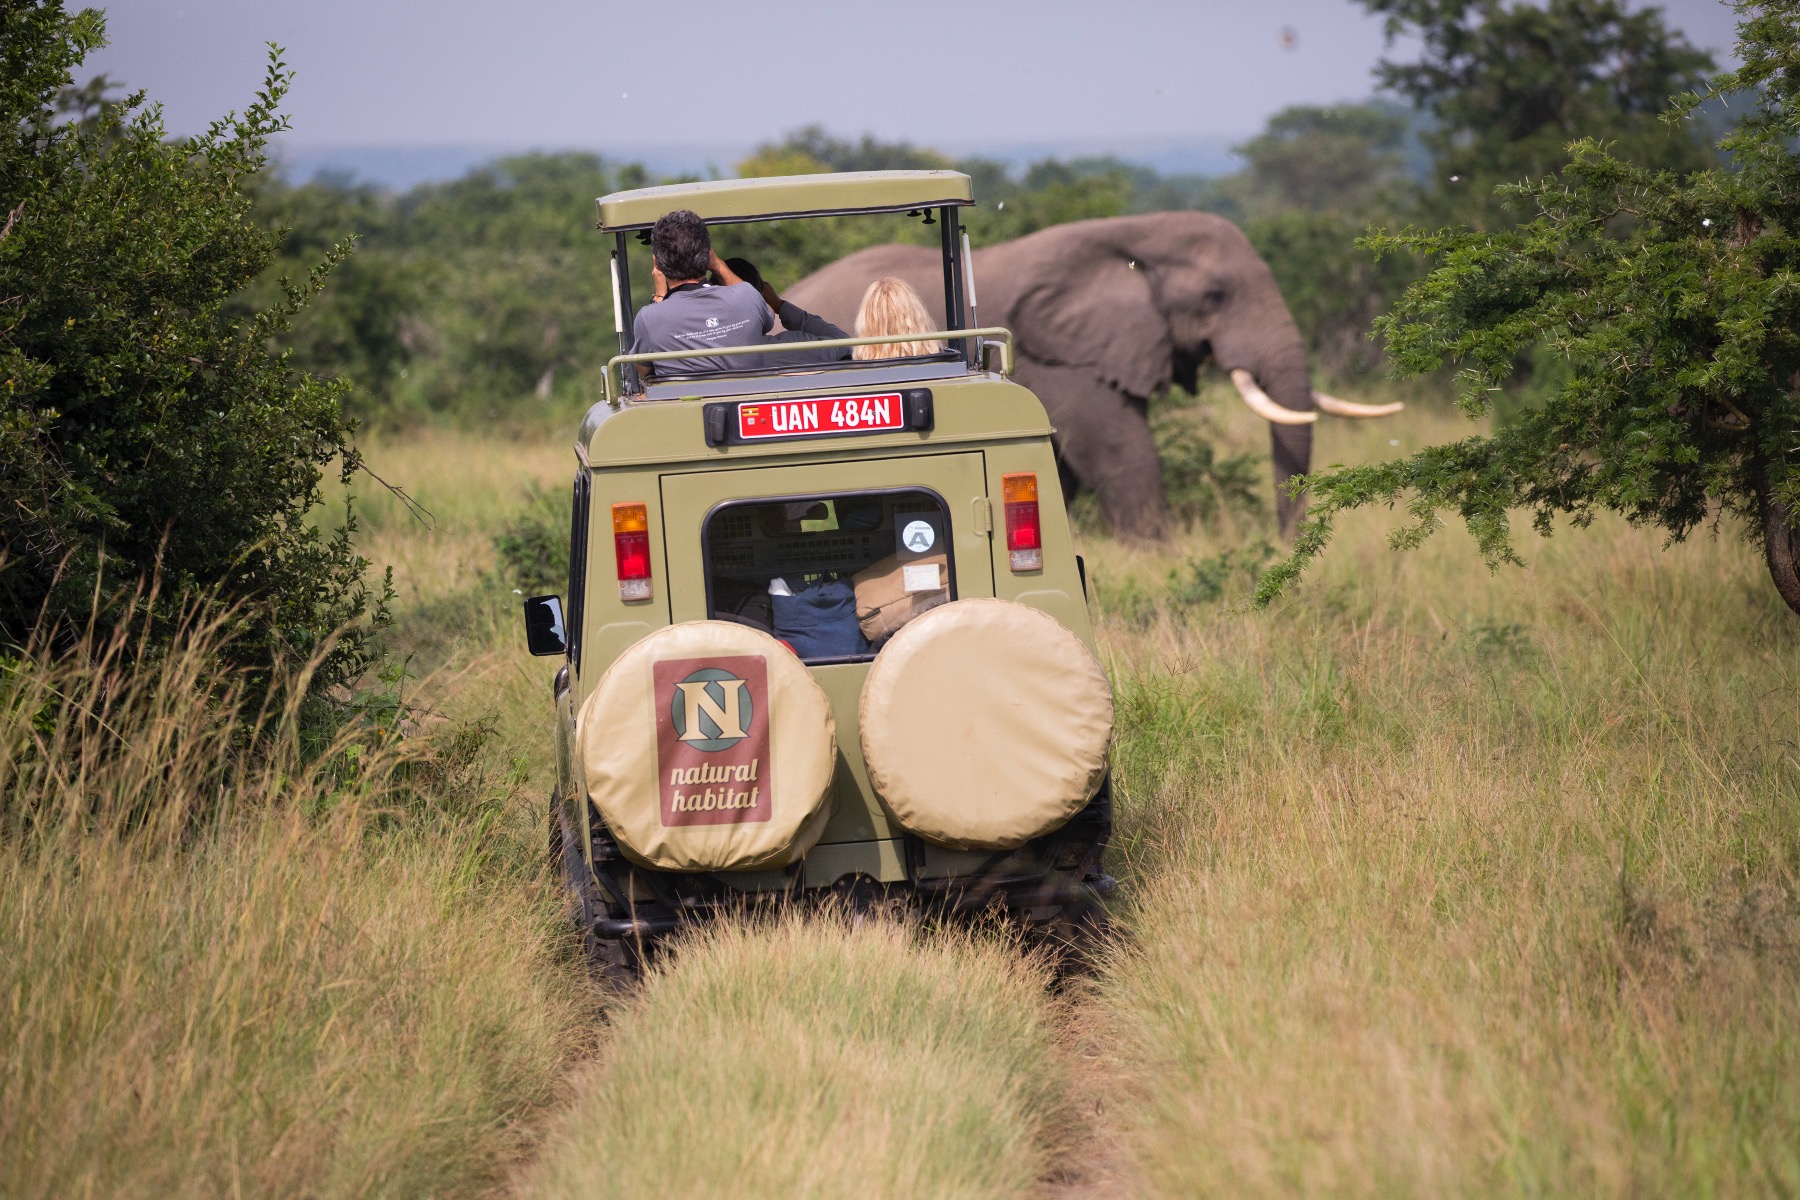 a safari truck views a large male elephant